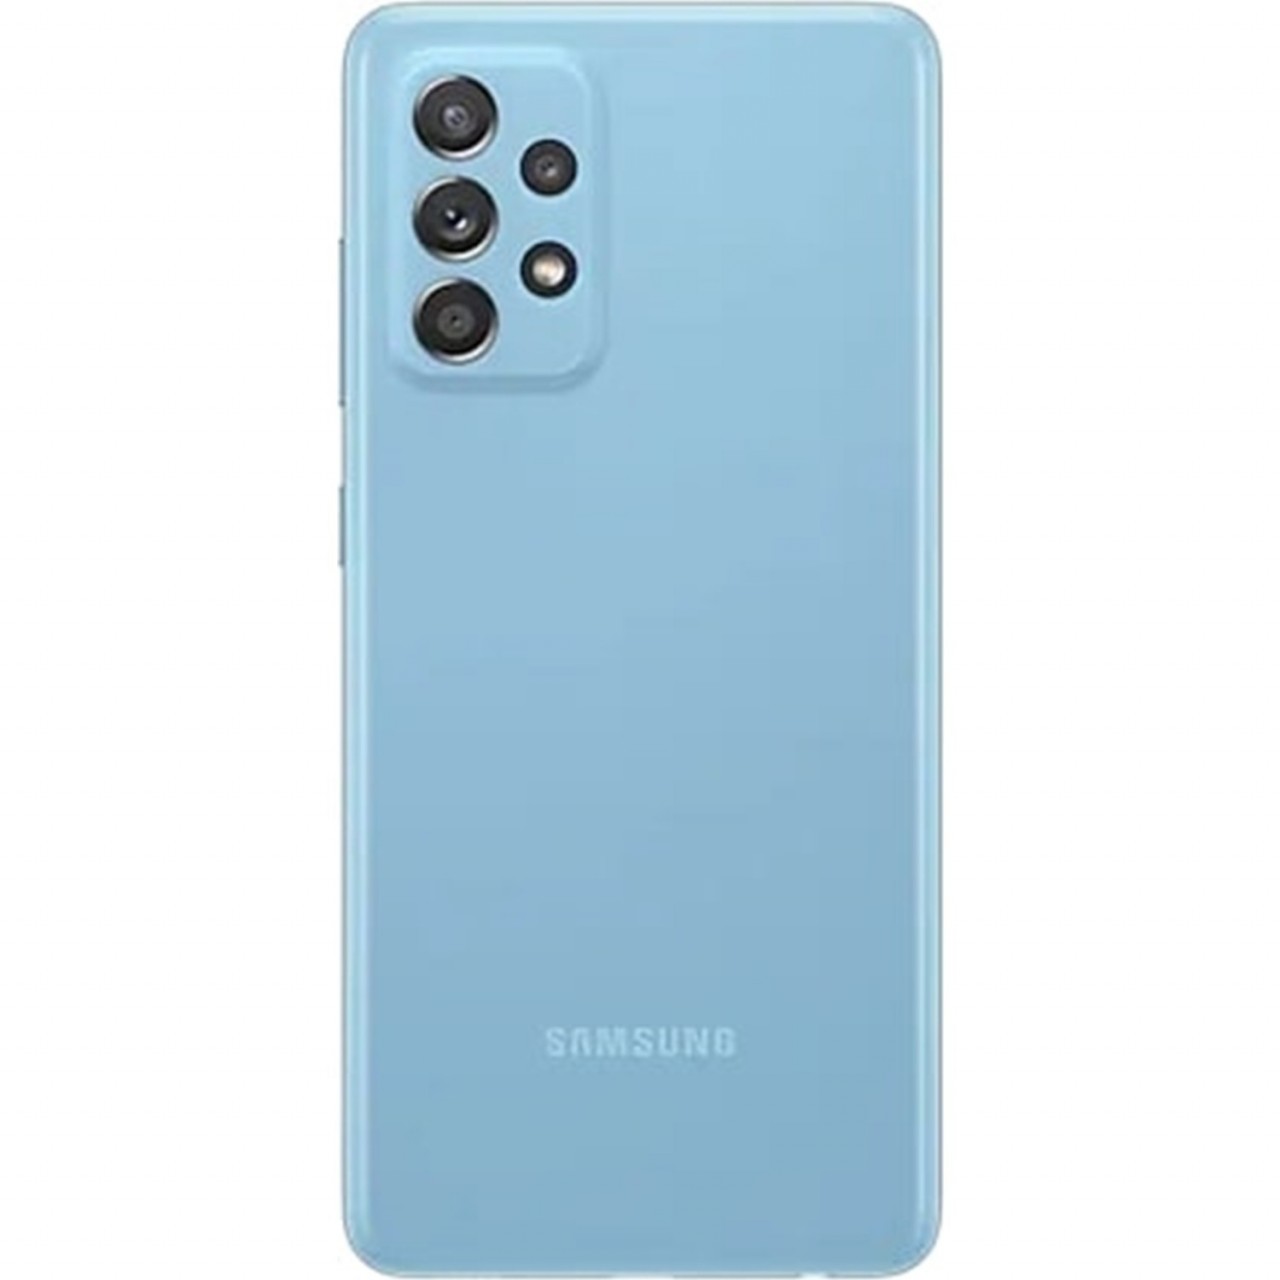 Samsung Galaxy A52 128 GB Mavi (Samsung Türkiye Garantili)